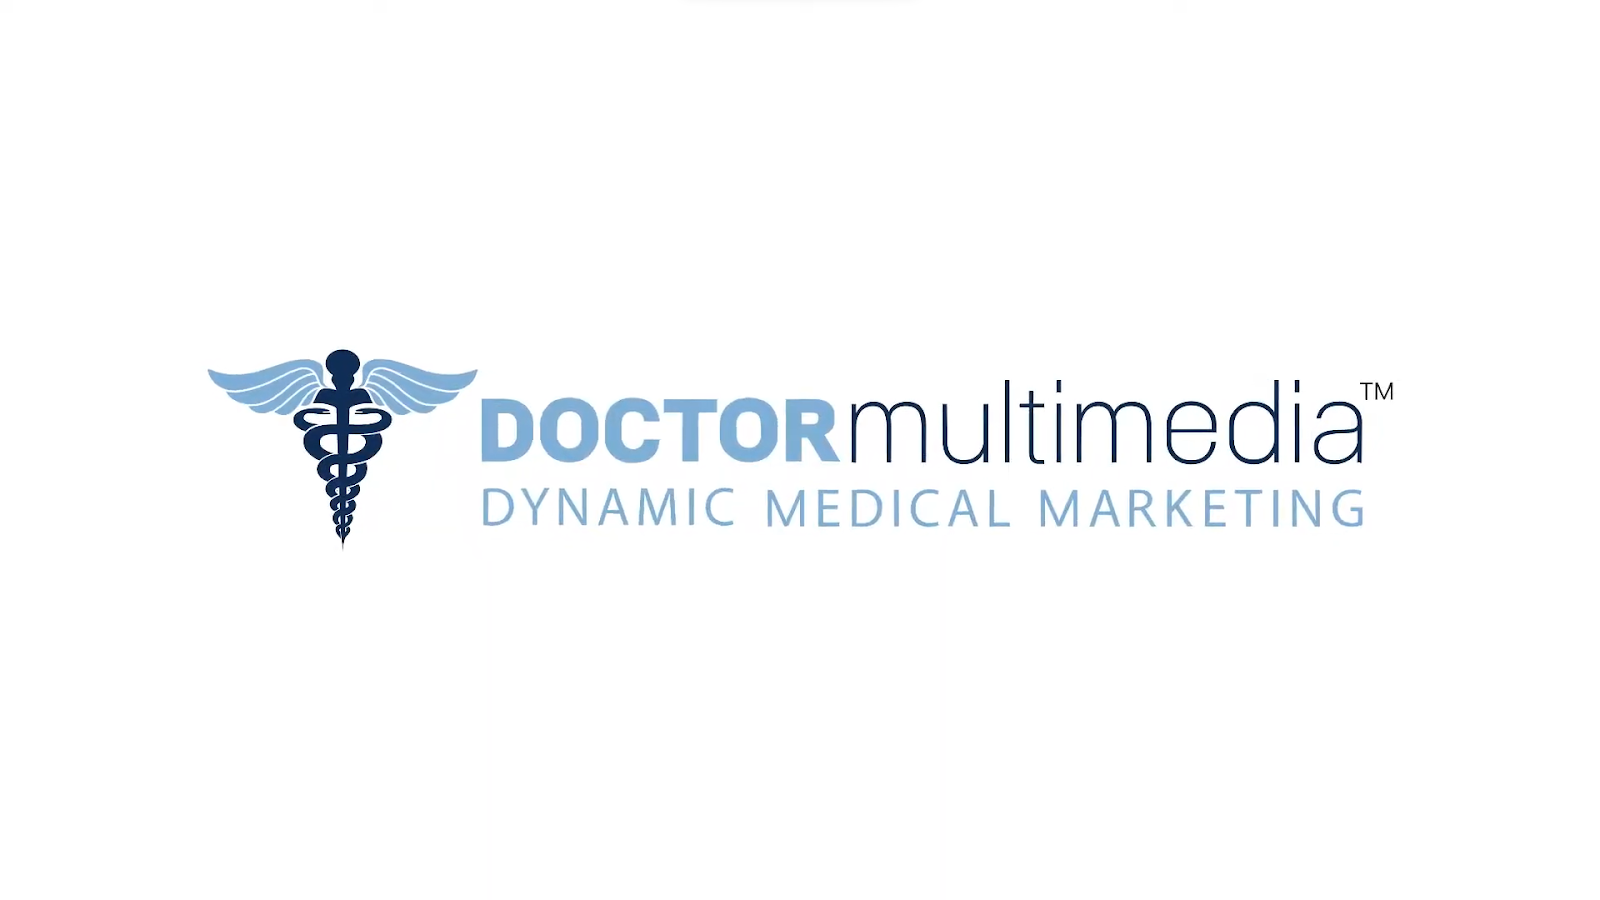 doctor multimedia and logo on white plain background